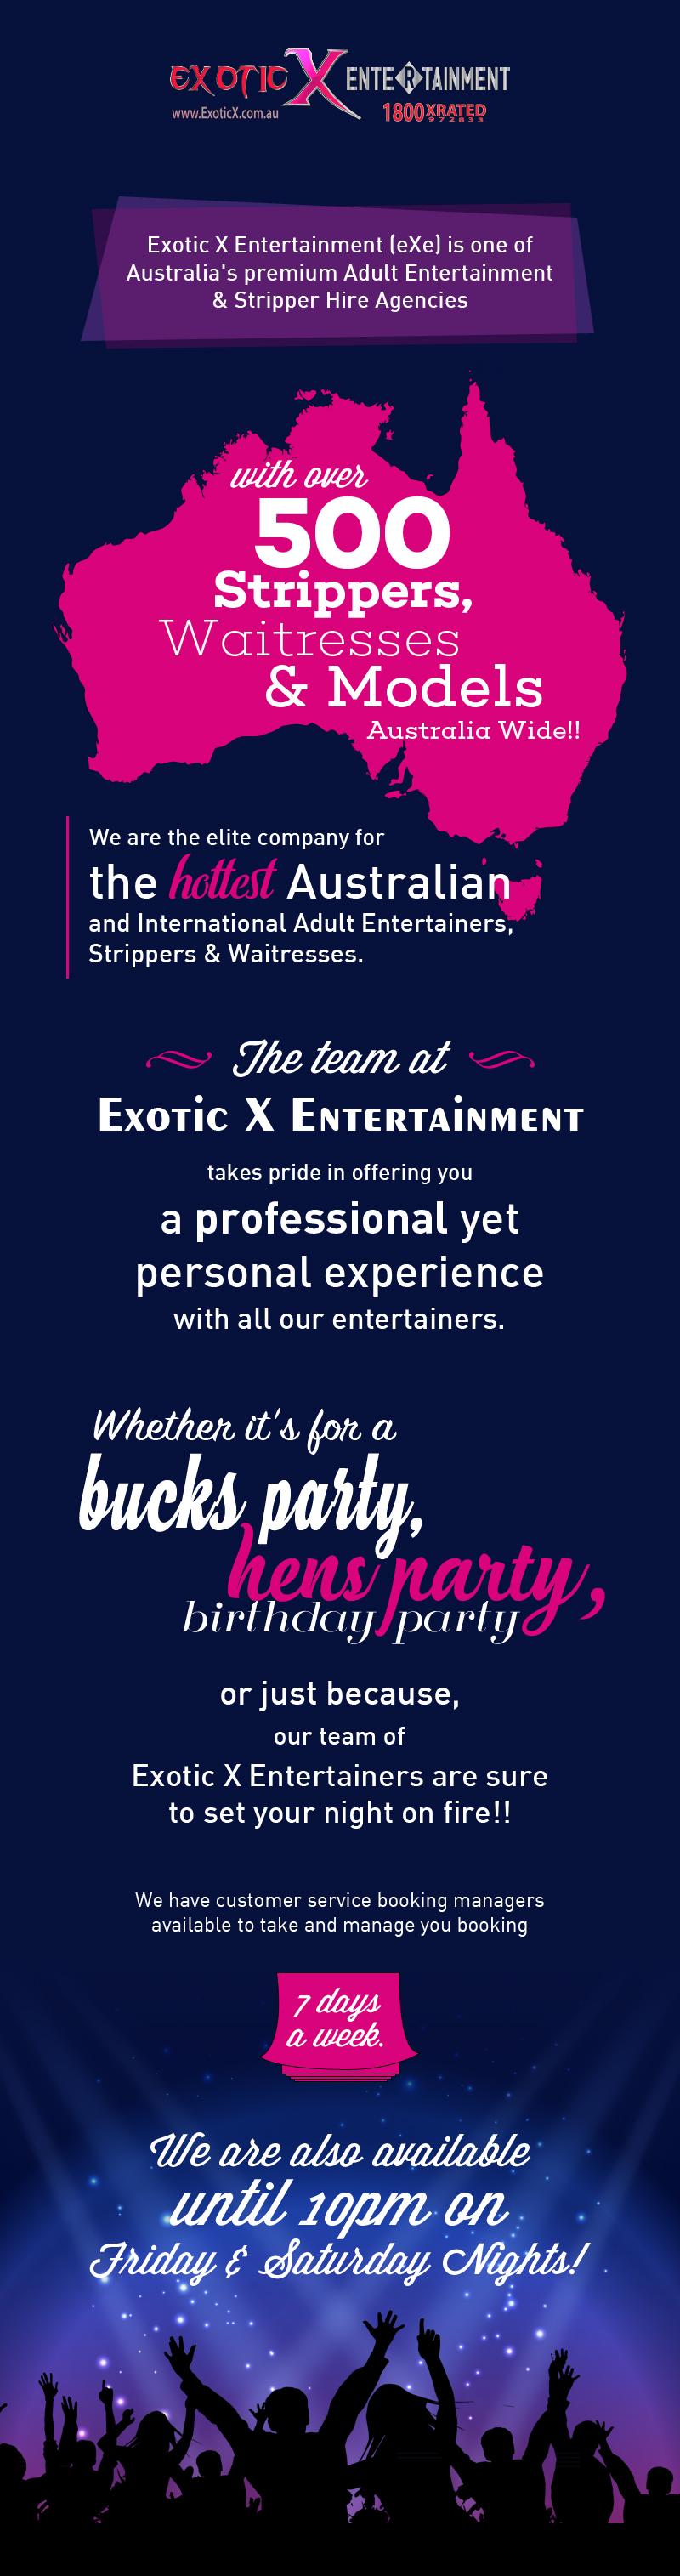 Exotic X Entertainment – Australia’s Premium Adult Entertainment Agency